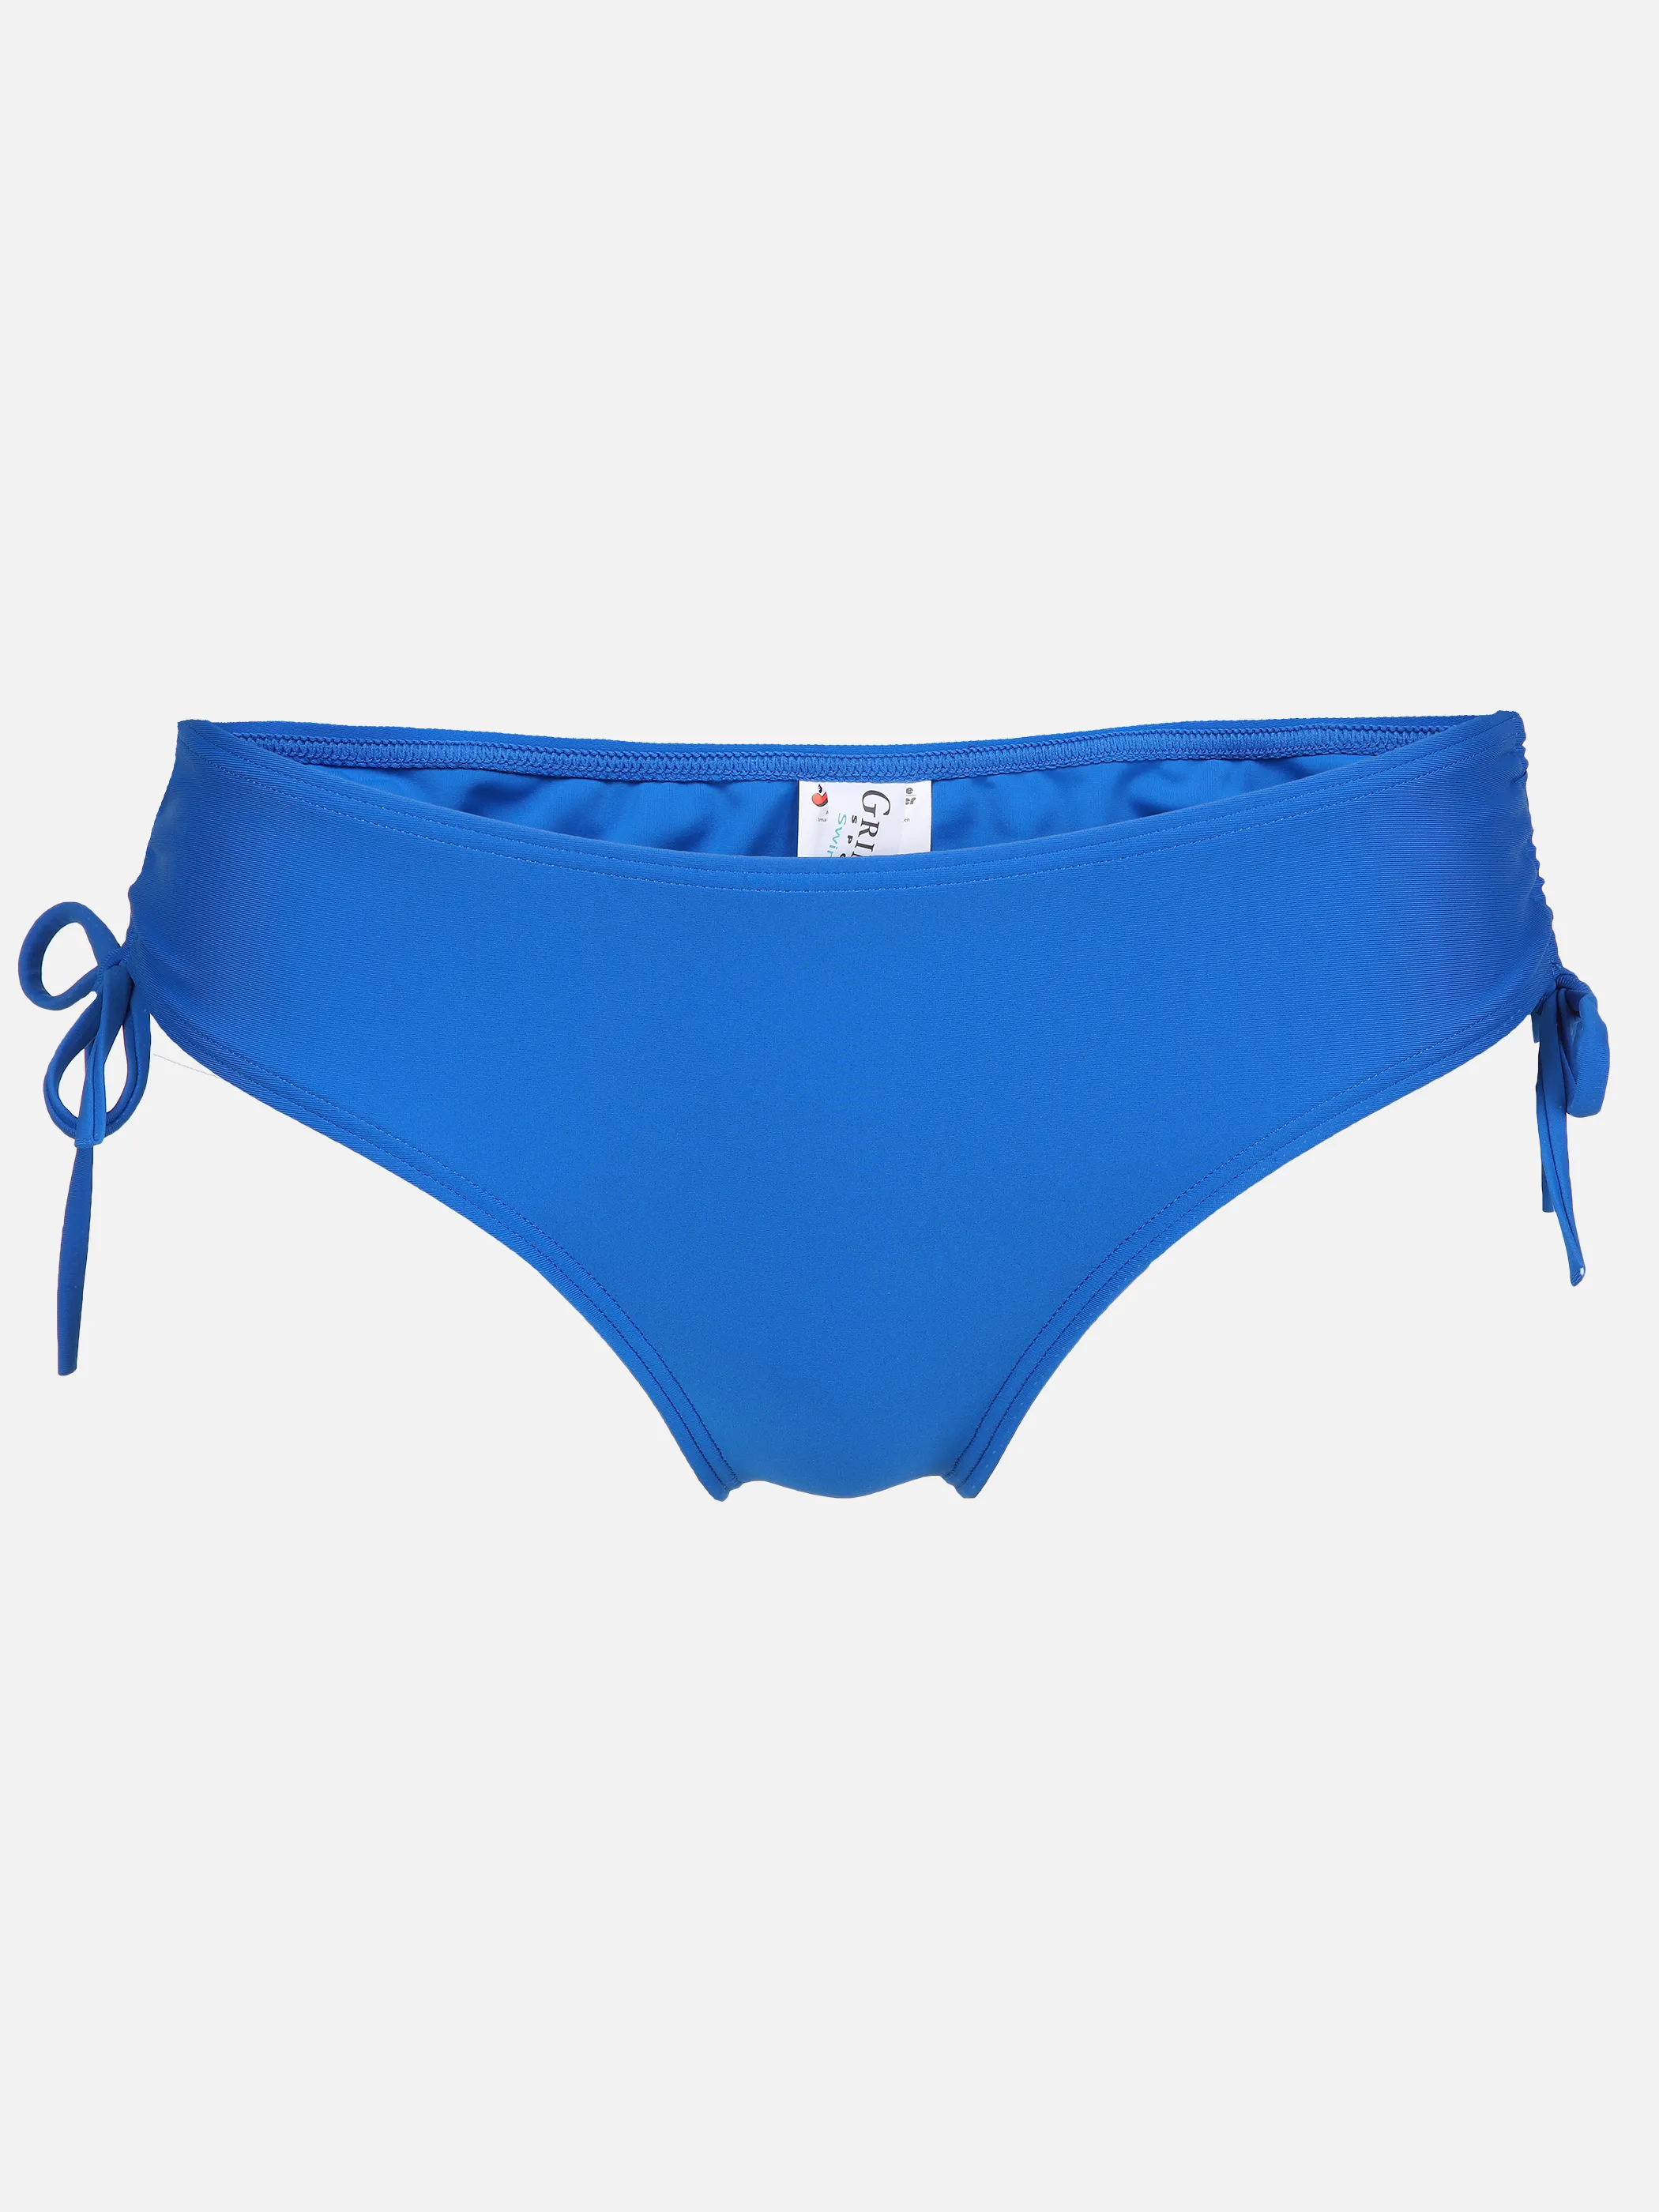 Grinario Sports Da-Bikini Hose uni Blau 890130 ROYAL BLUE 1